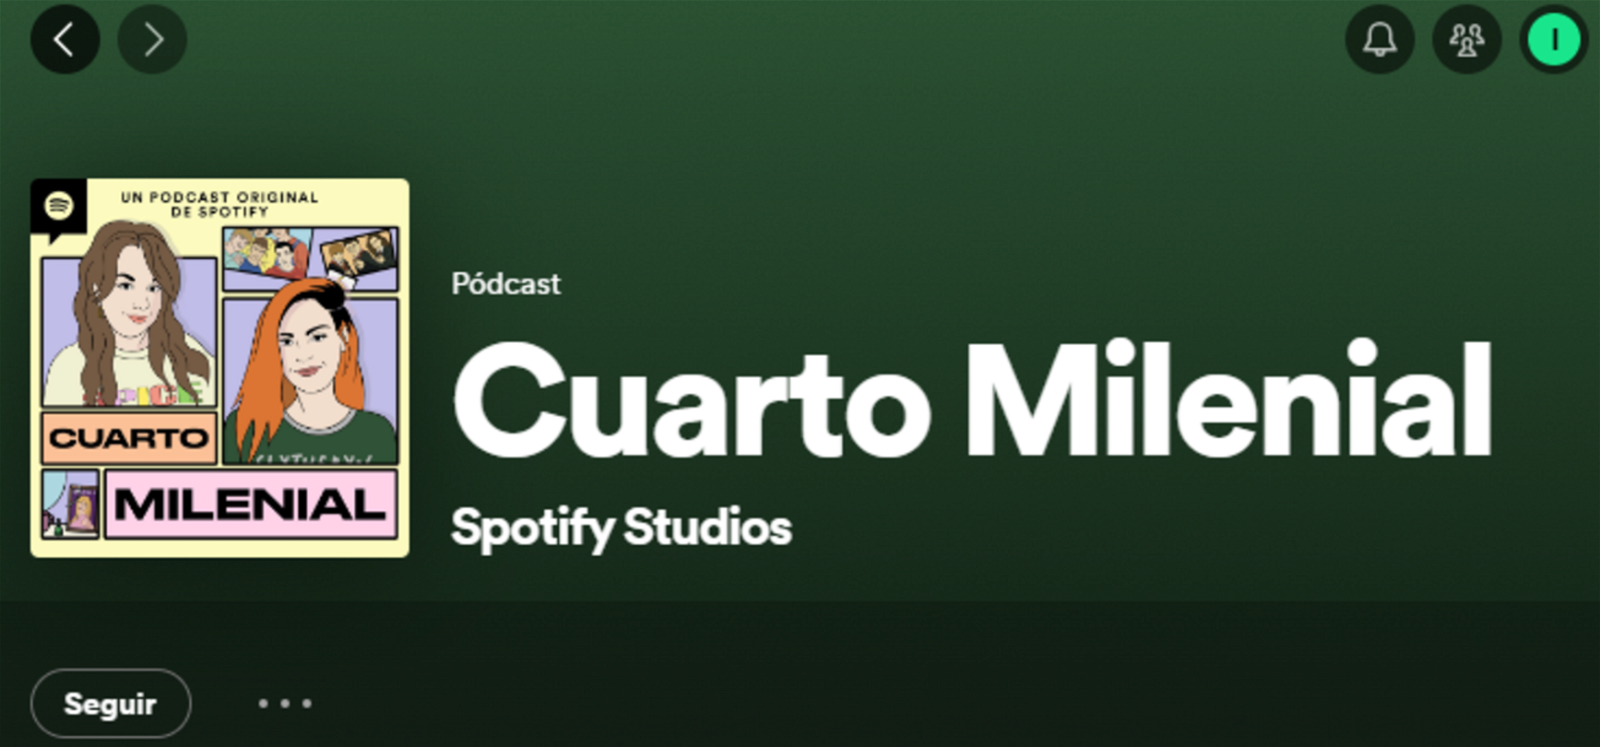 Portada del podcast Cuatro Milenial